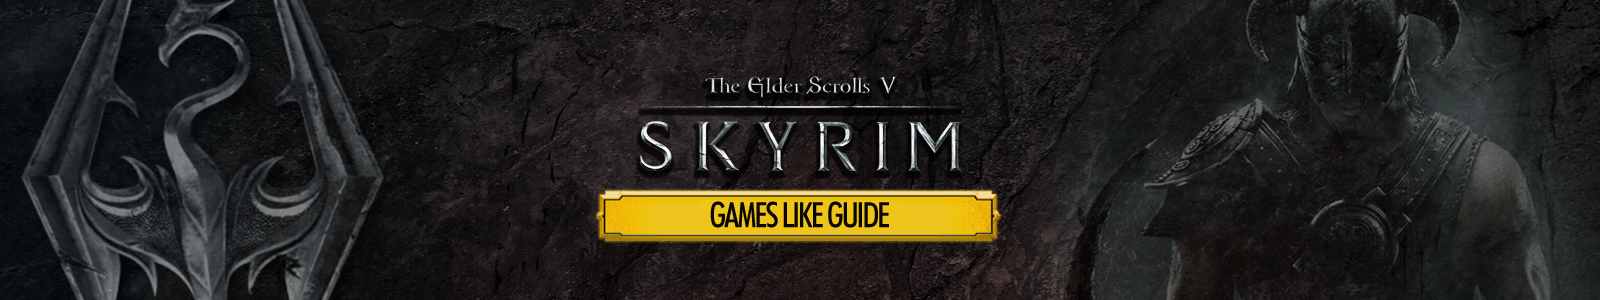 Skyrim games like guide